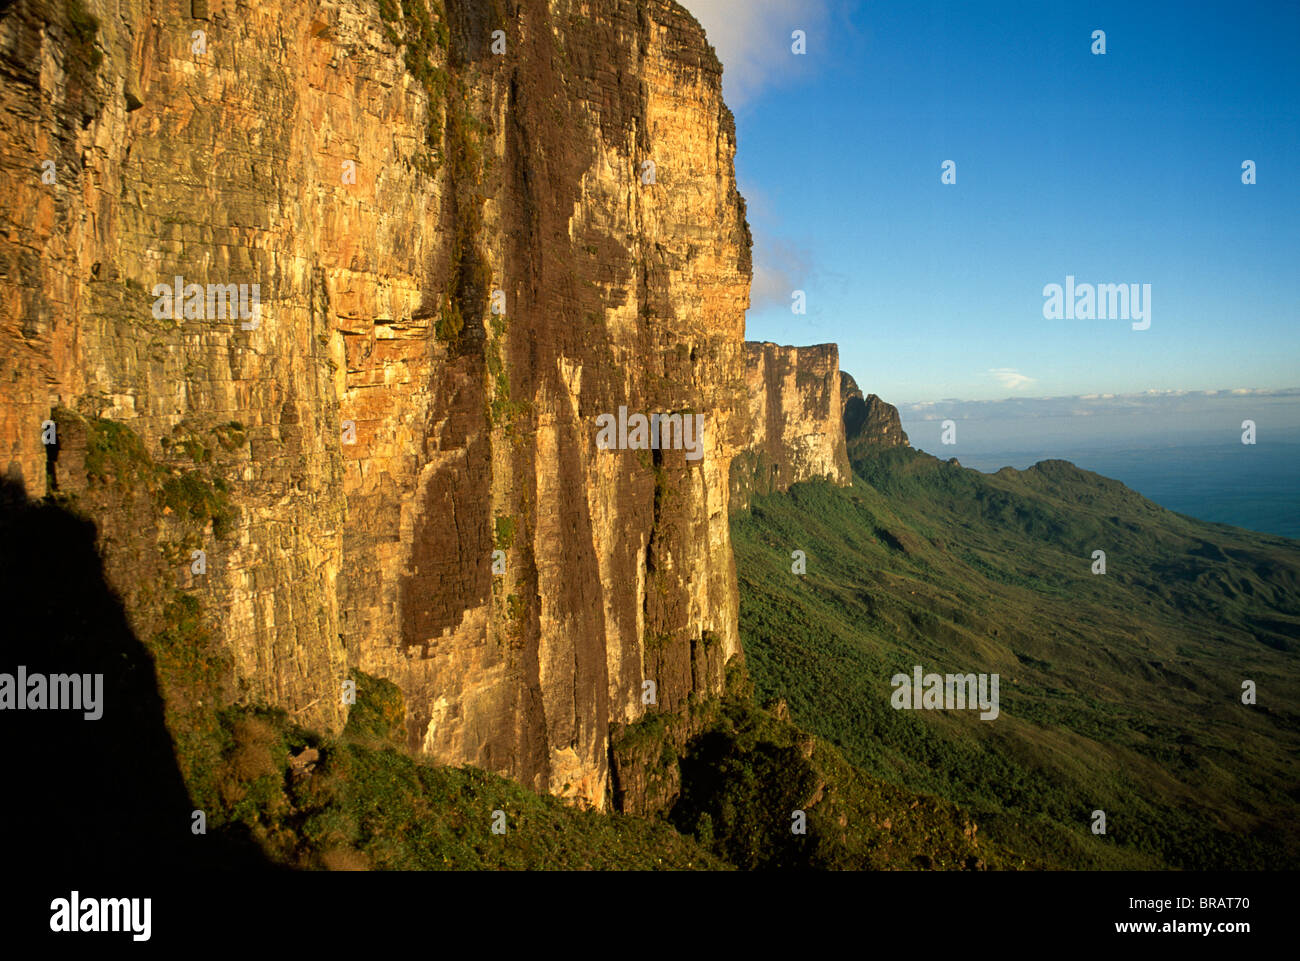 Southwestern cliff from ascent ledge, Mount Roraima (Cerro Roraima), Tepuis, Estado Bolivar, Venezuela, South America Stock Photo